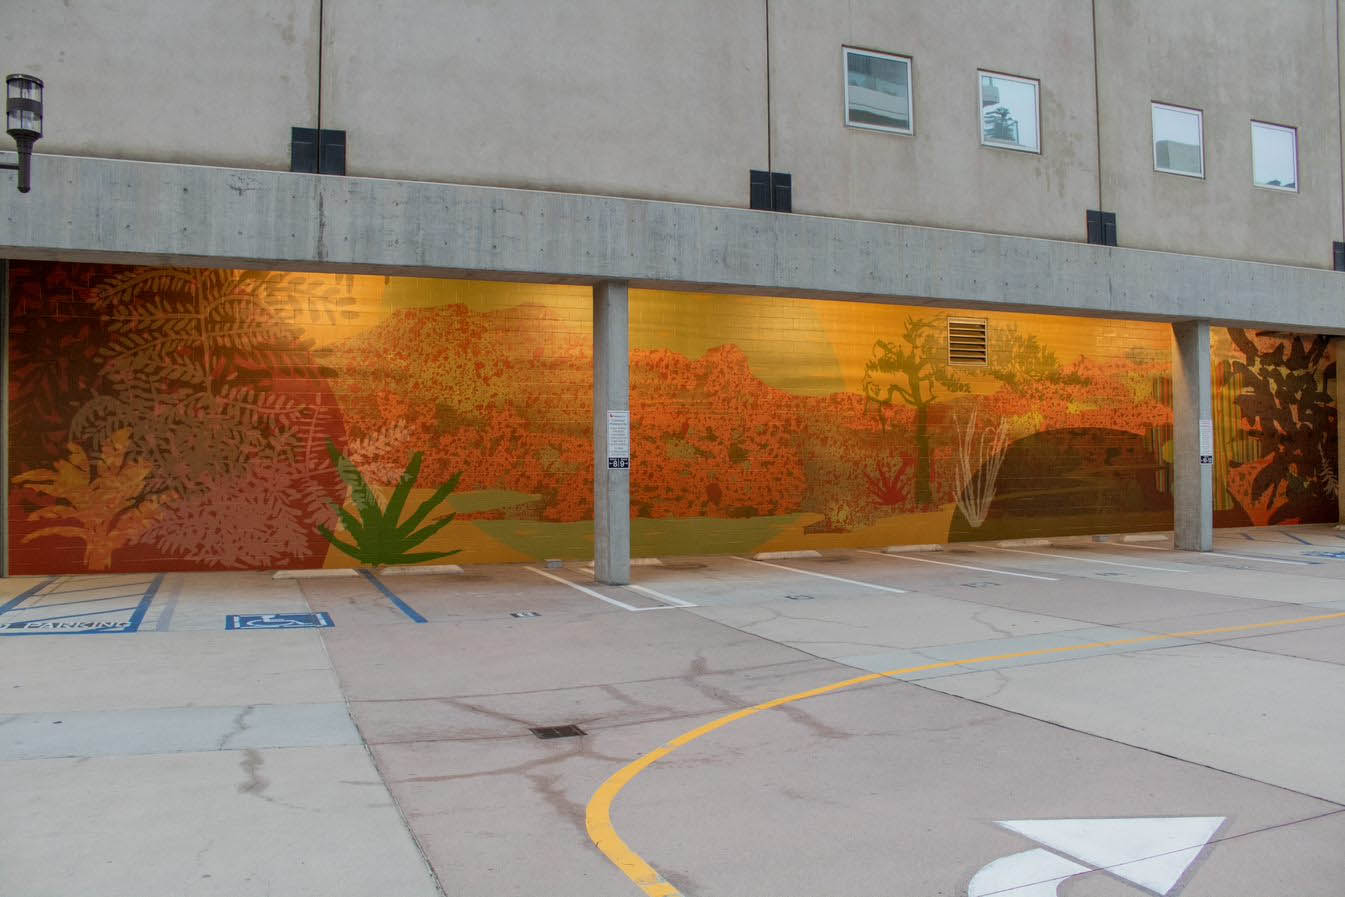 Wall mural in parking garage